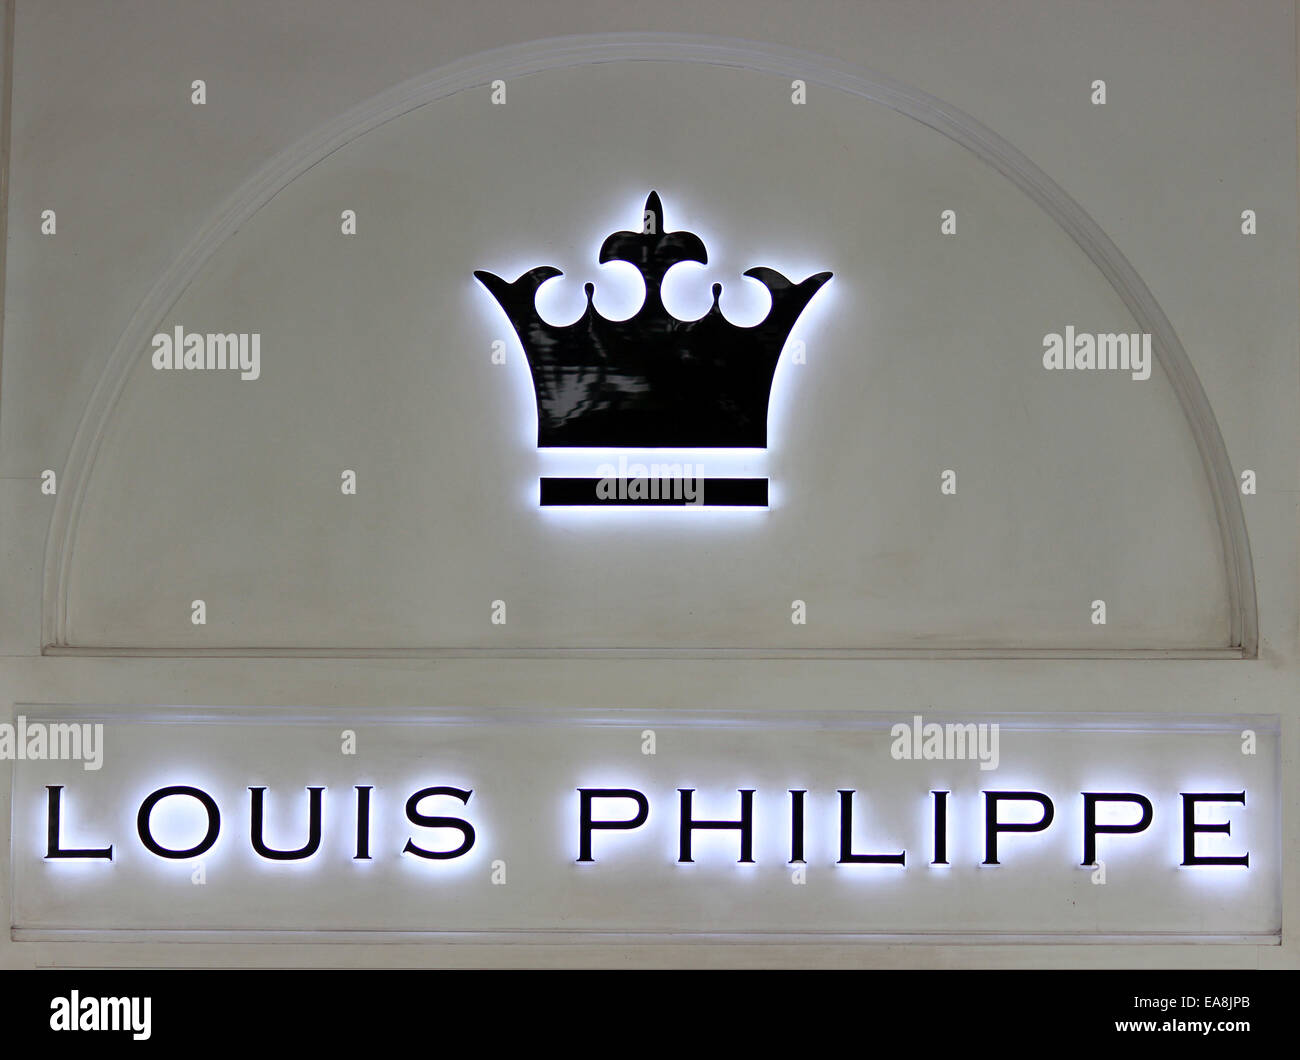 Louis Philippe store, New Delhi India